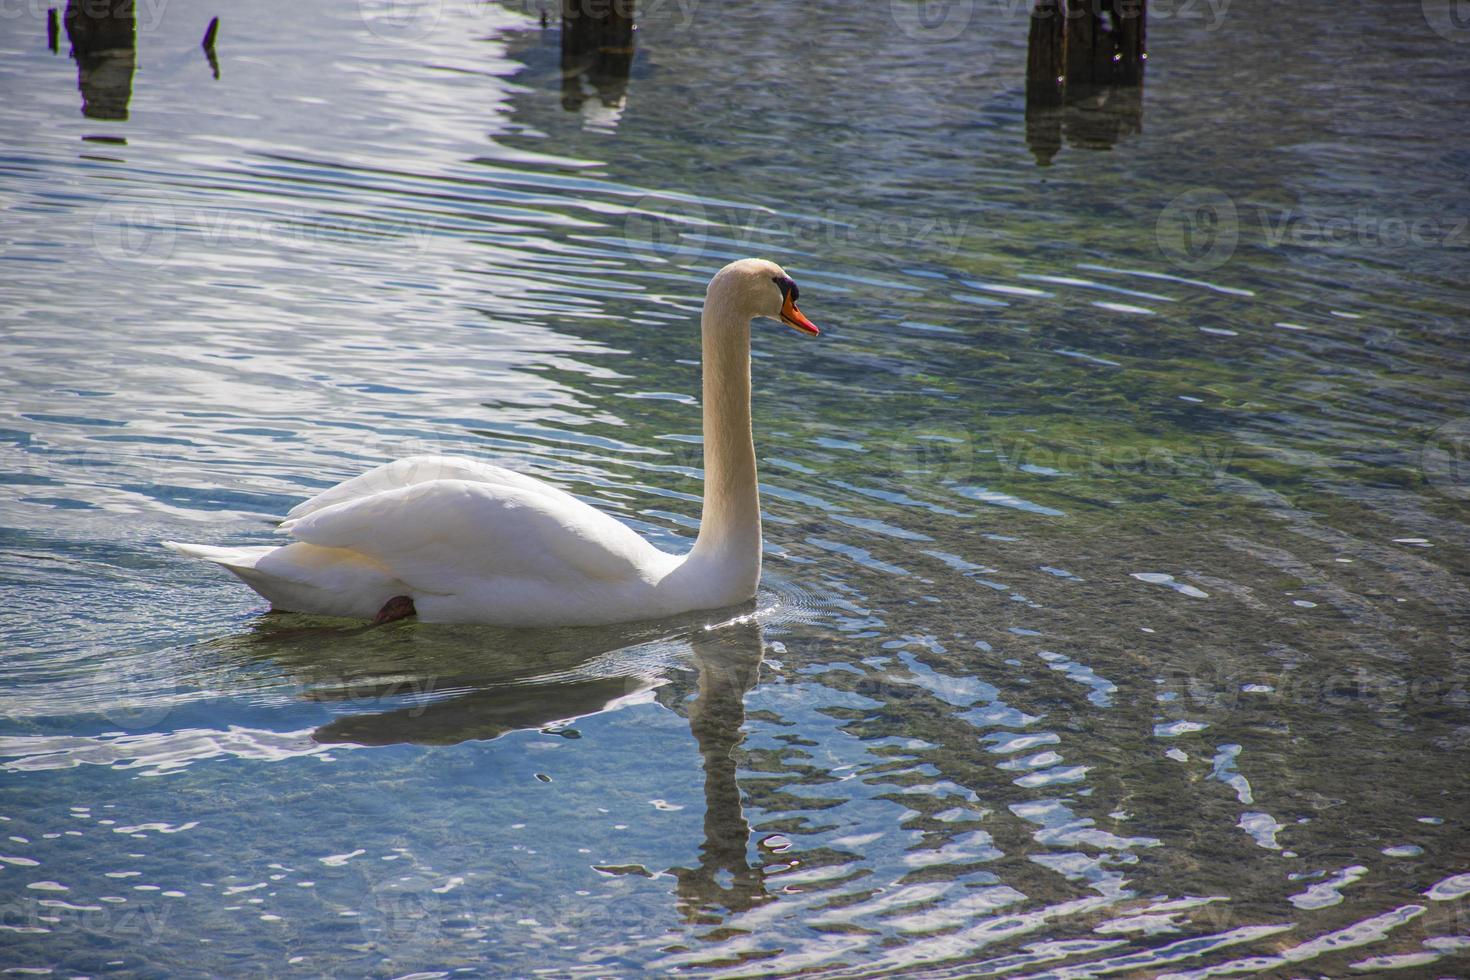 Alpine lake with white swan photo